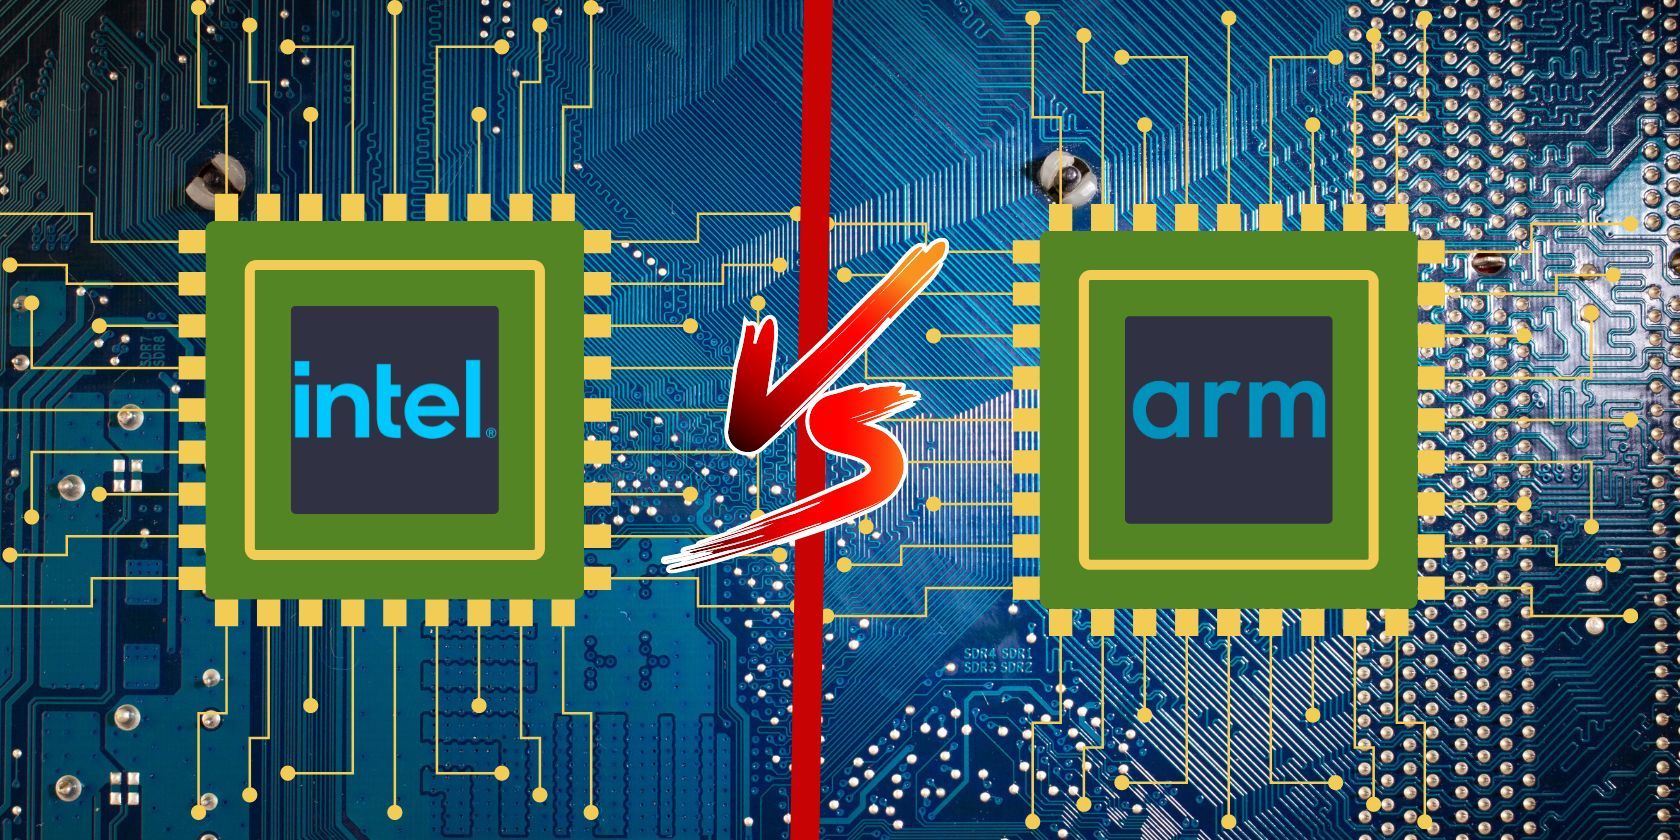 Intel vs. ARM